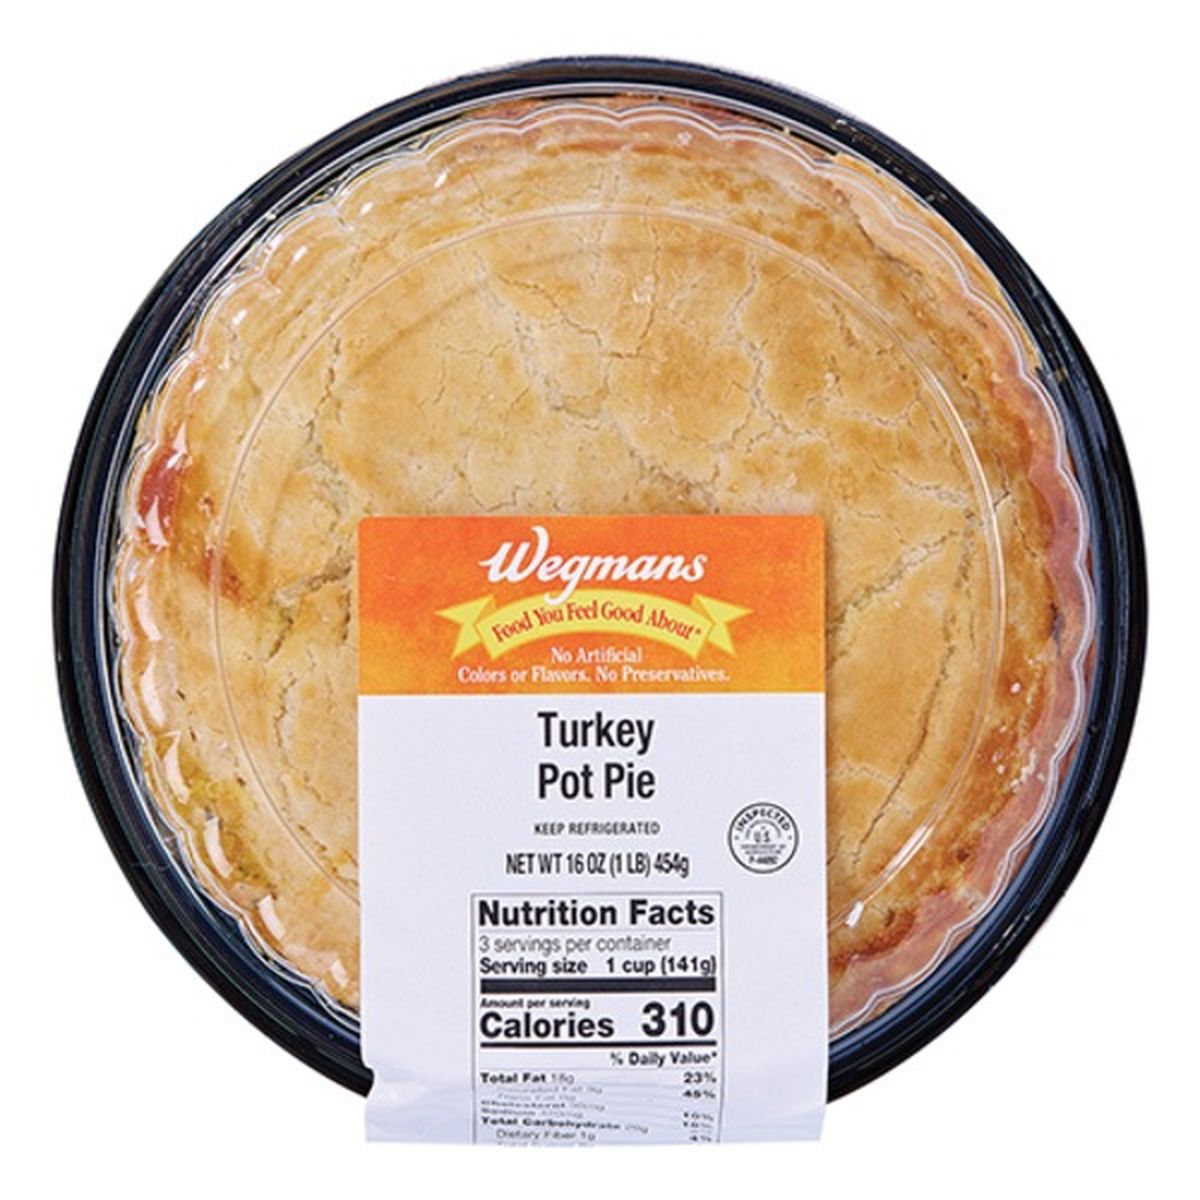 Calories in Wegmans Turkey Pot Pie